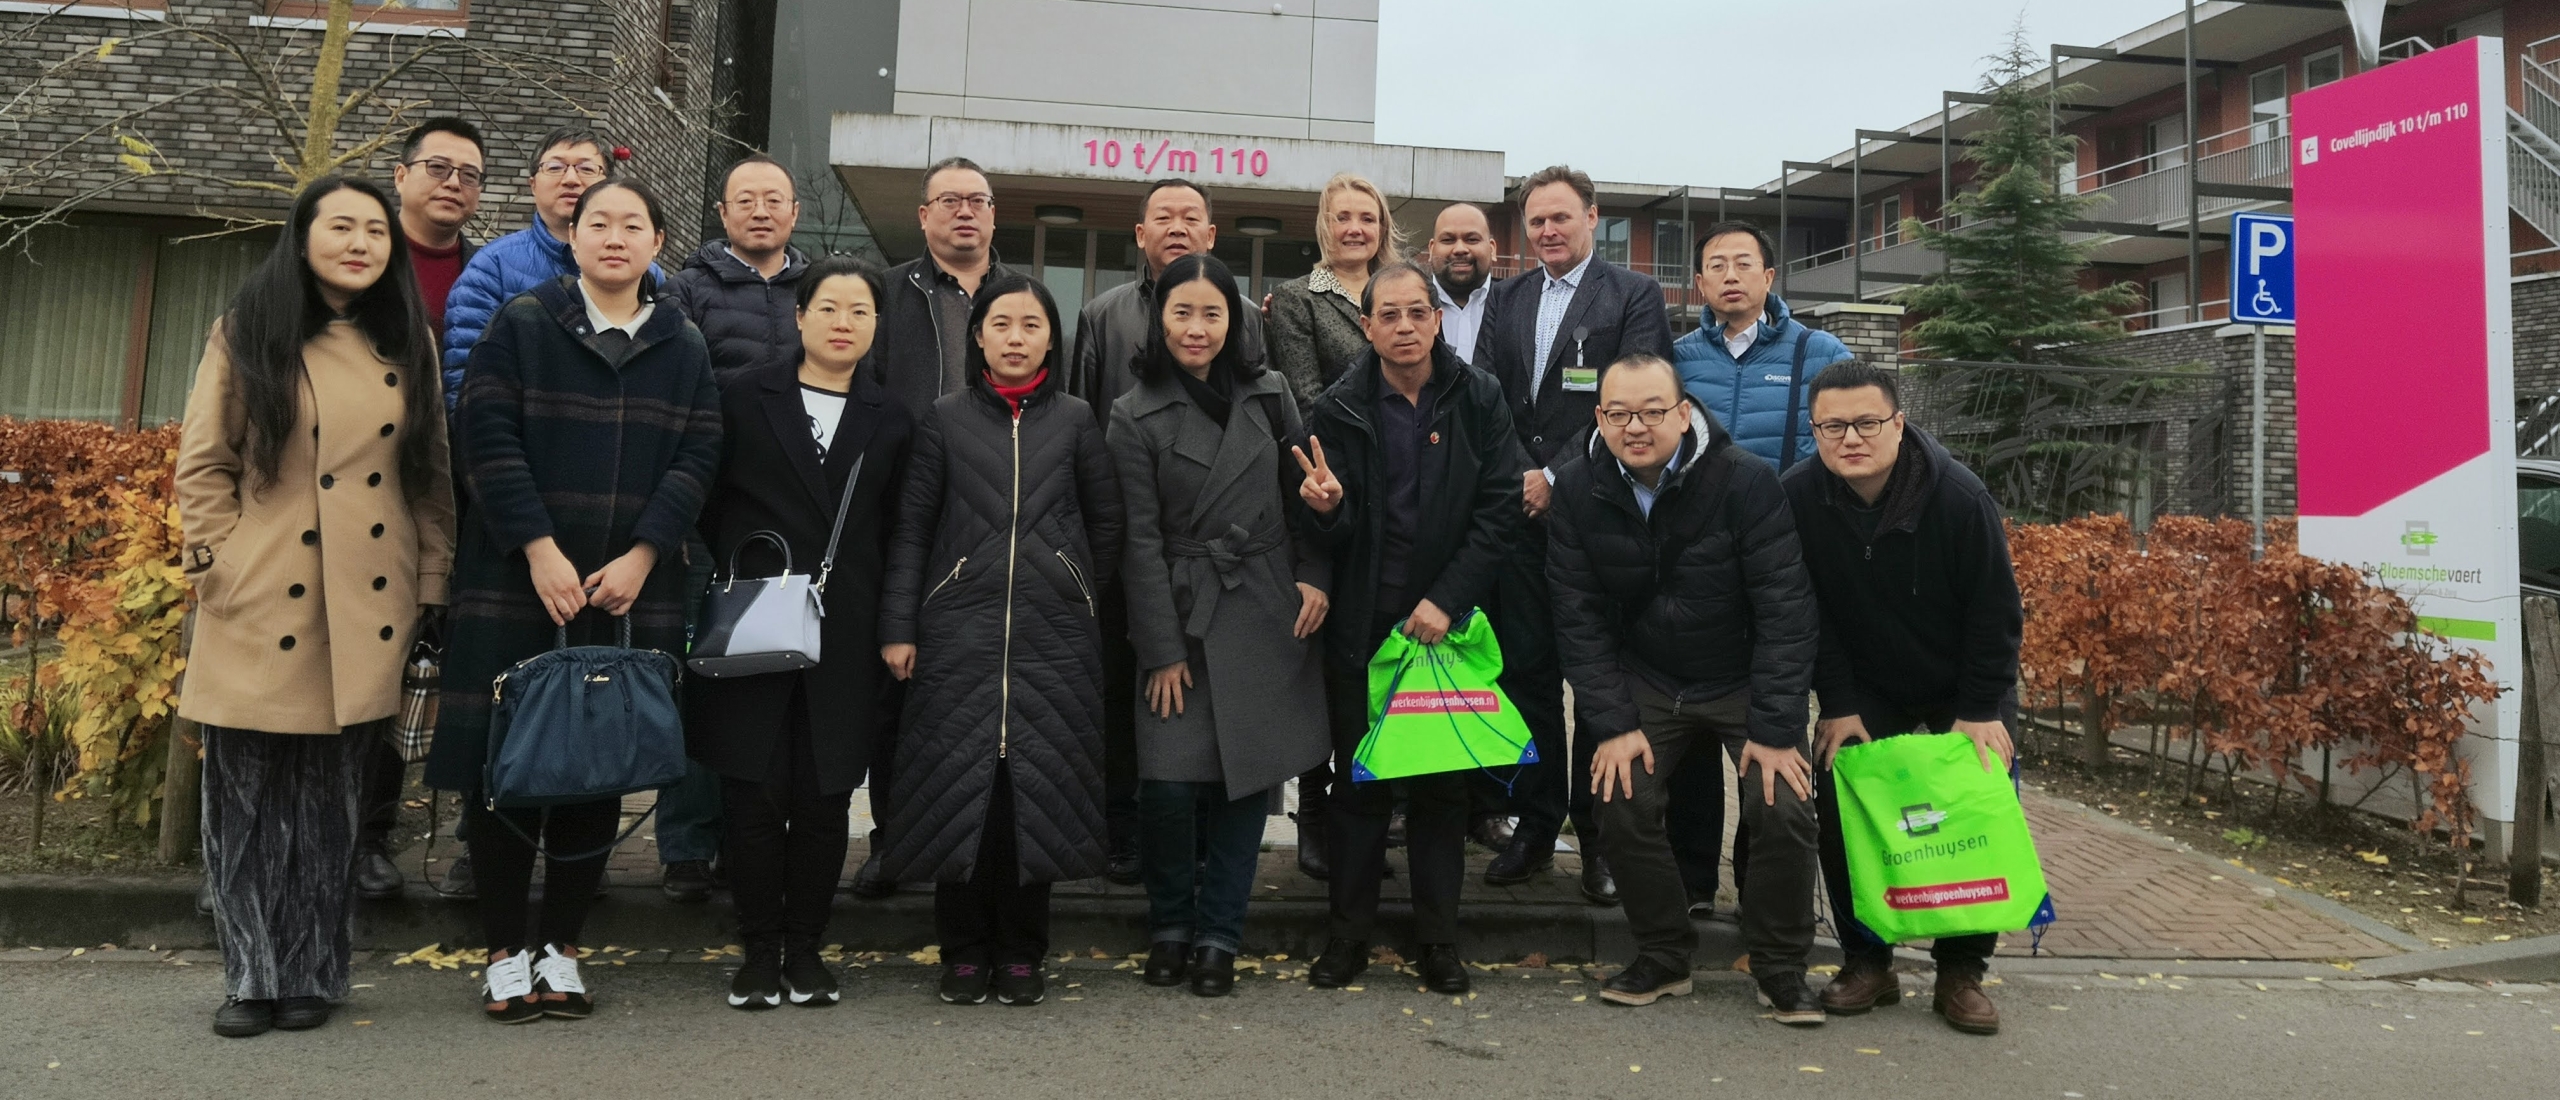 Jilin delegation from China visit the Netherlands